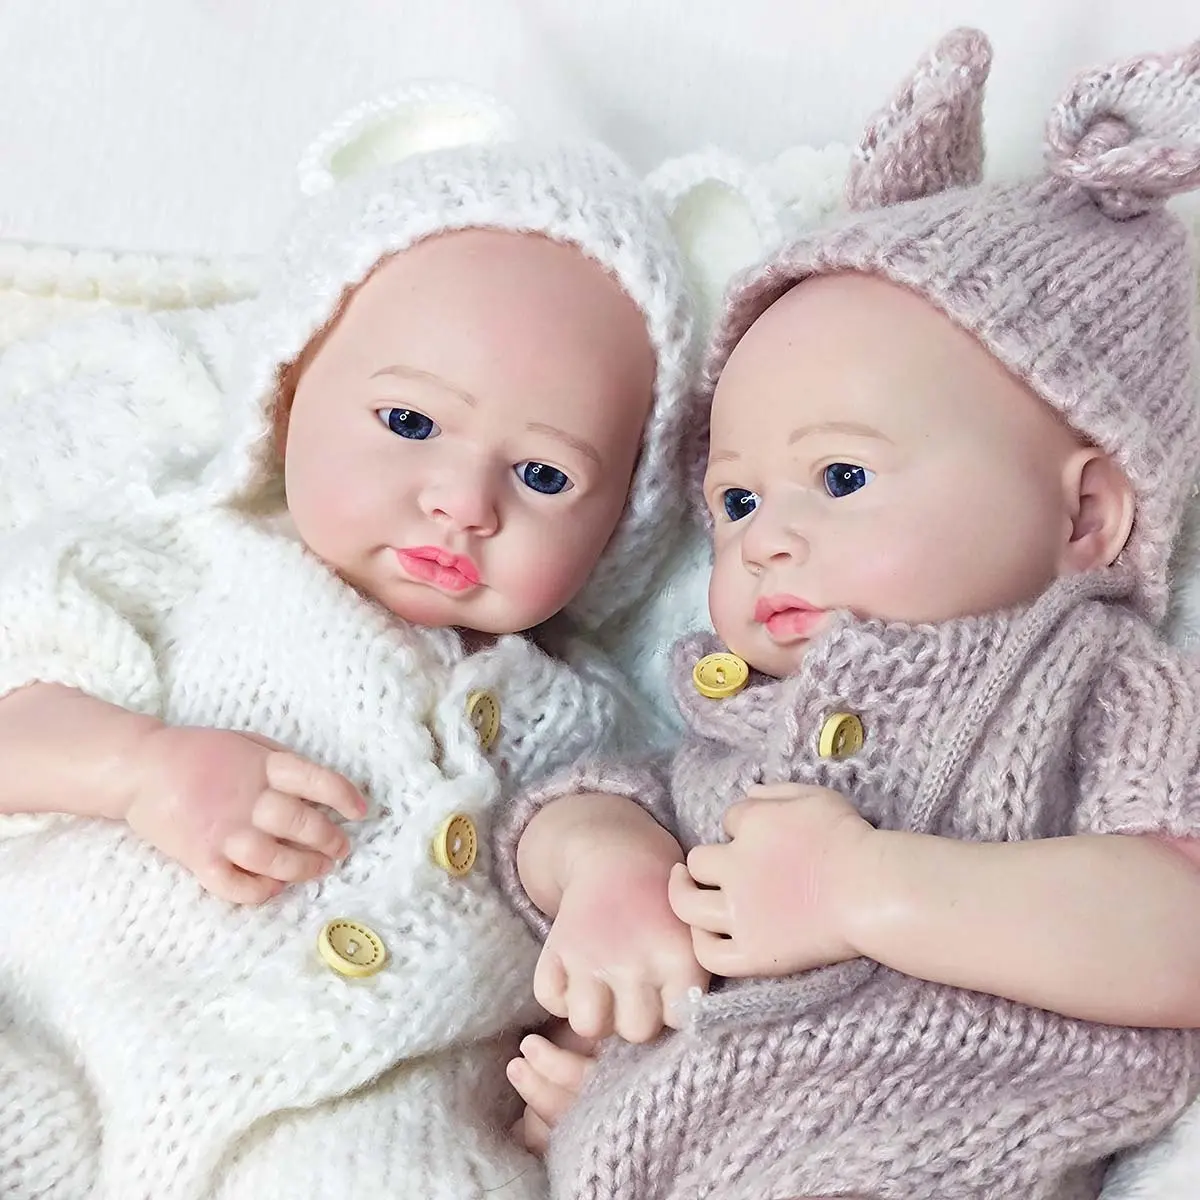 Barato Corpo Inteiro Silicone Bebe Boneca De Lifelike Reborn Baby Dolls Soft Silicone Twins Menino E Menina